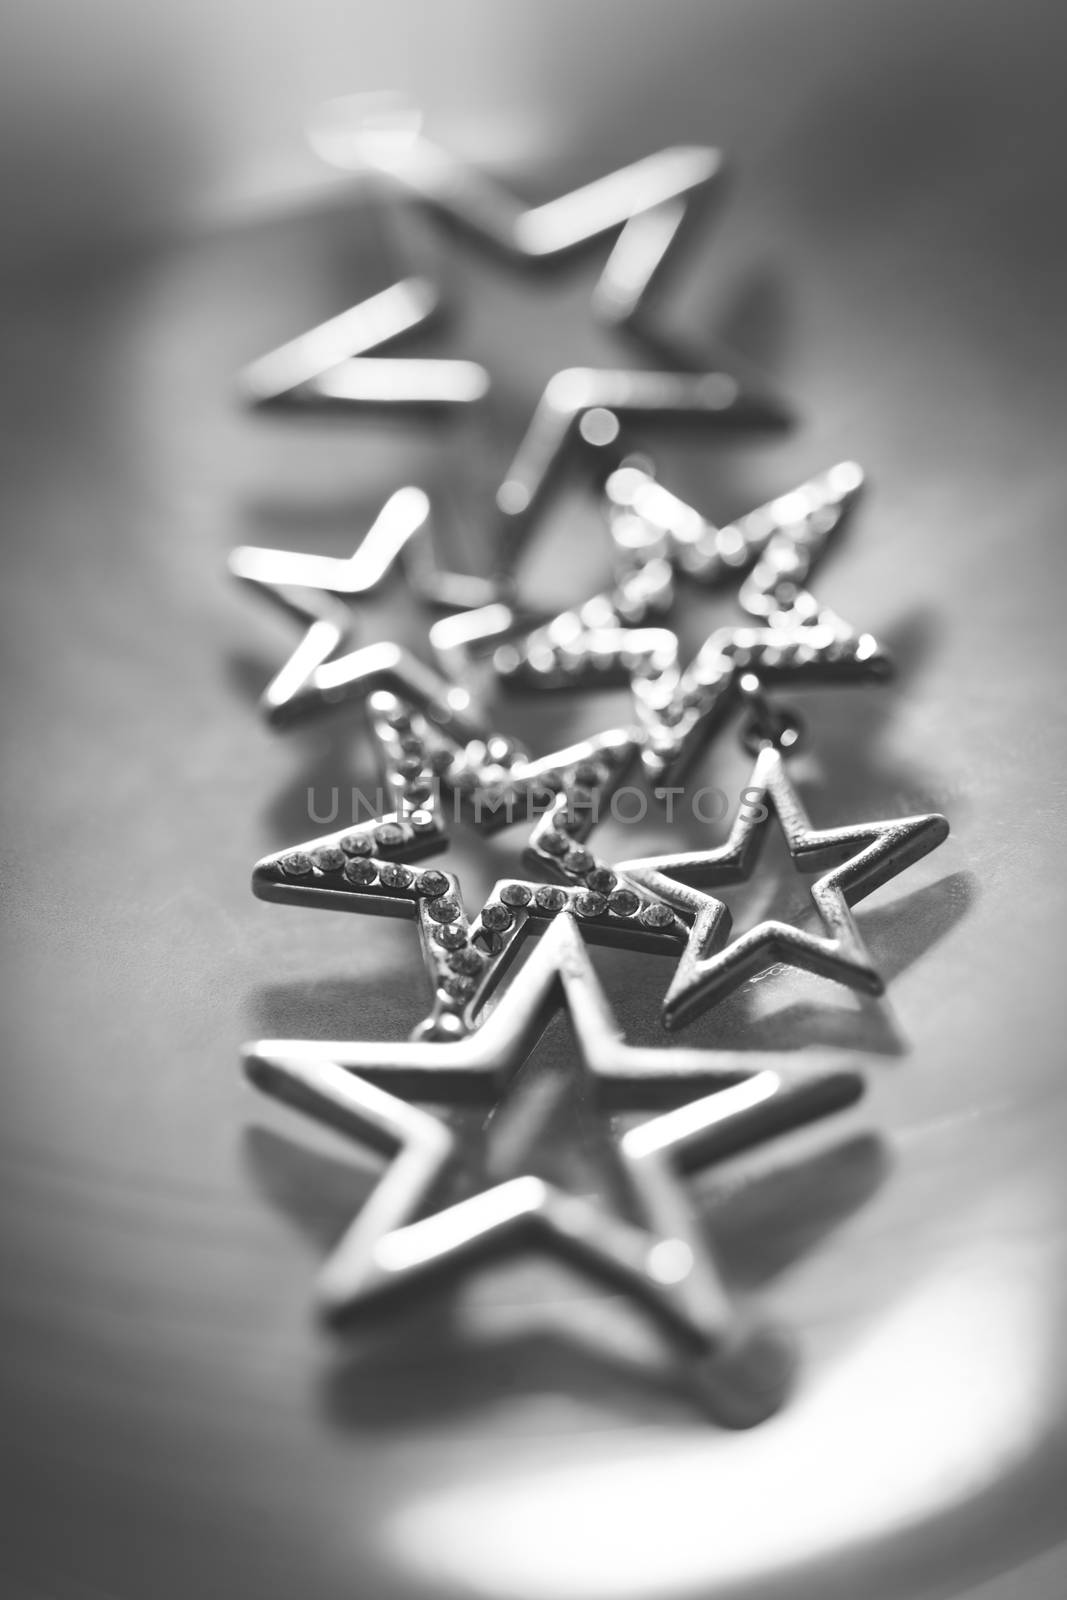 The blurred military star 